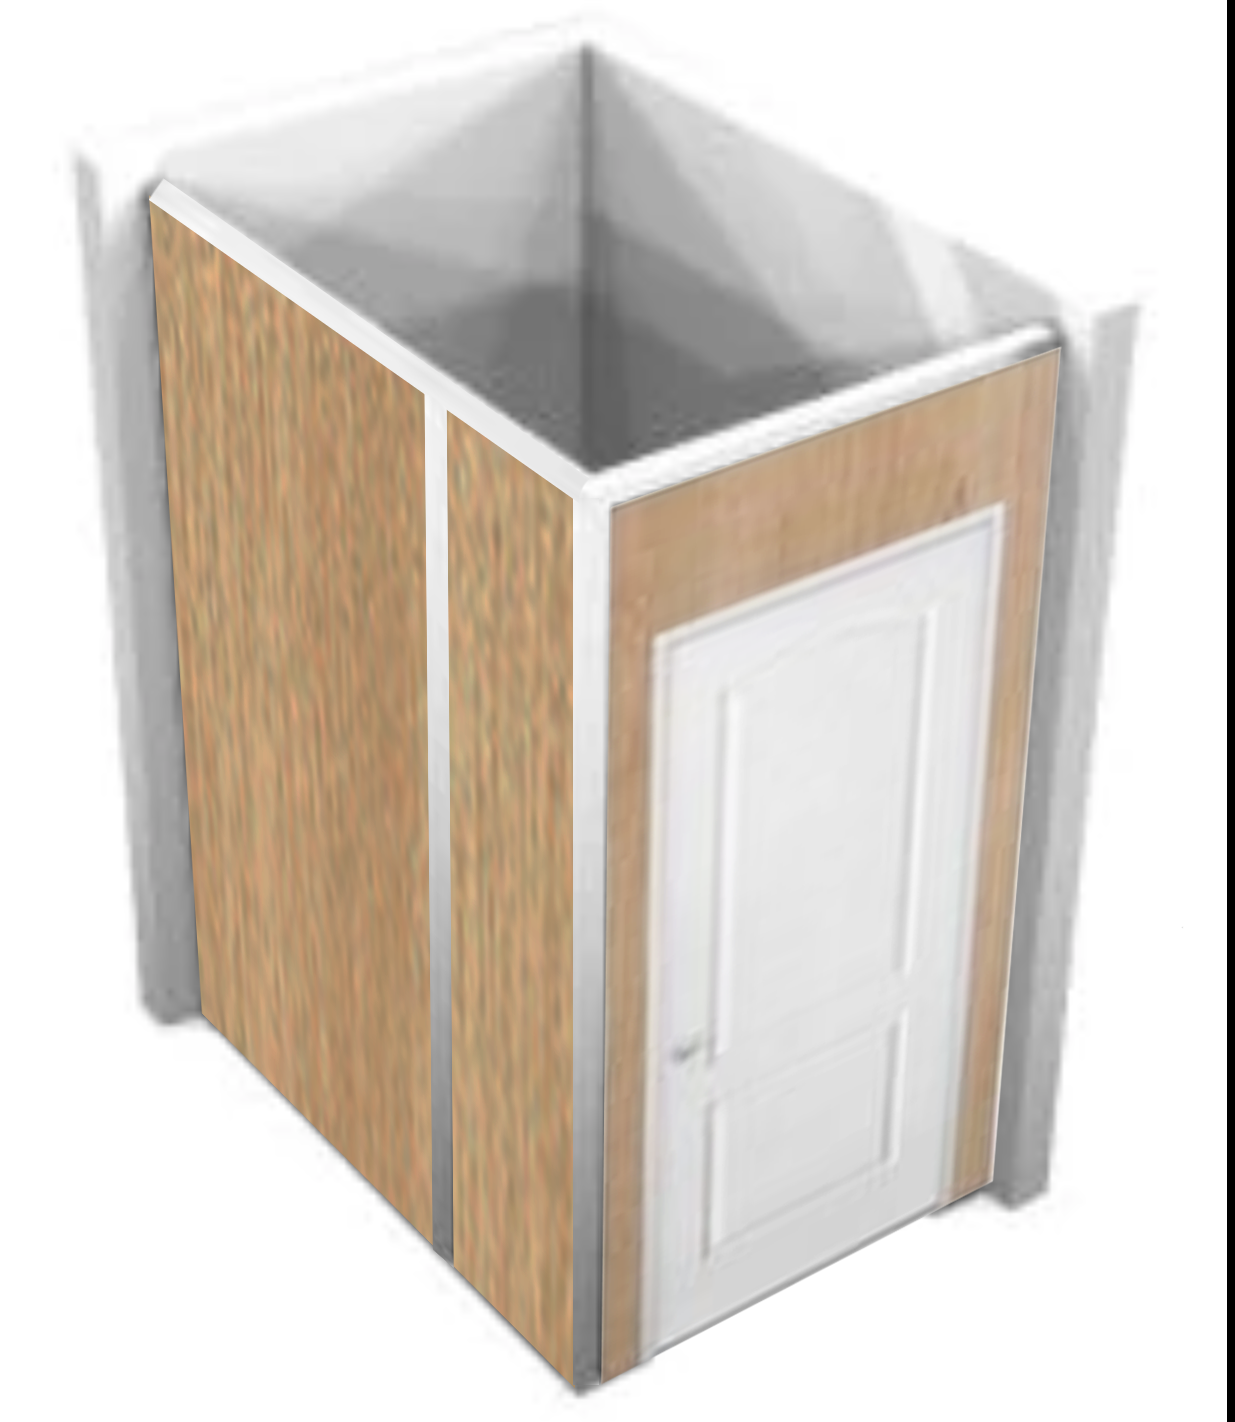 4x5-2-wall-room - light wood grain with white full door